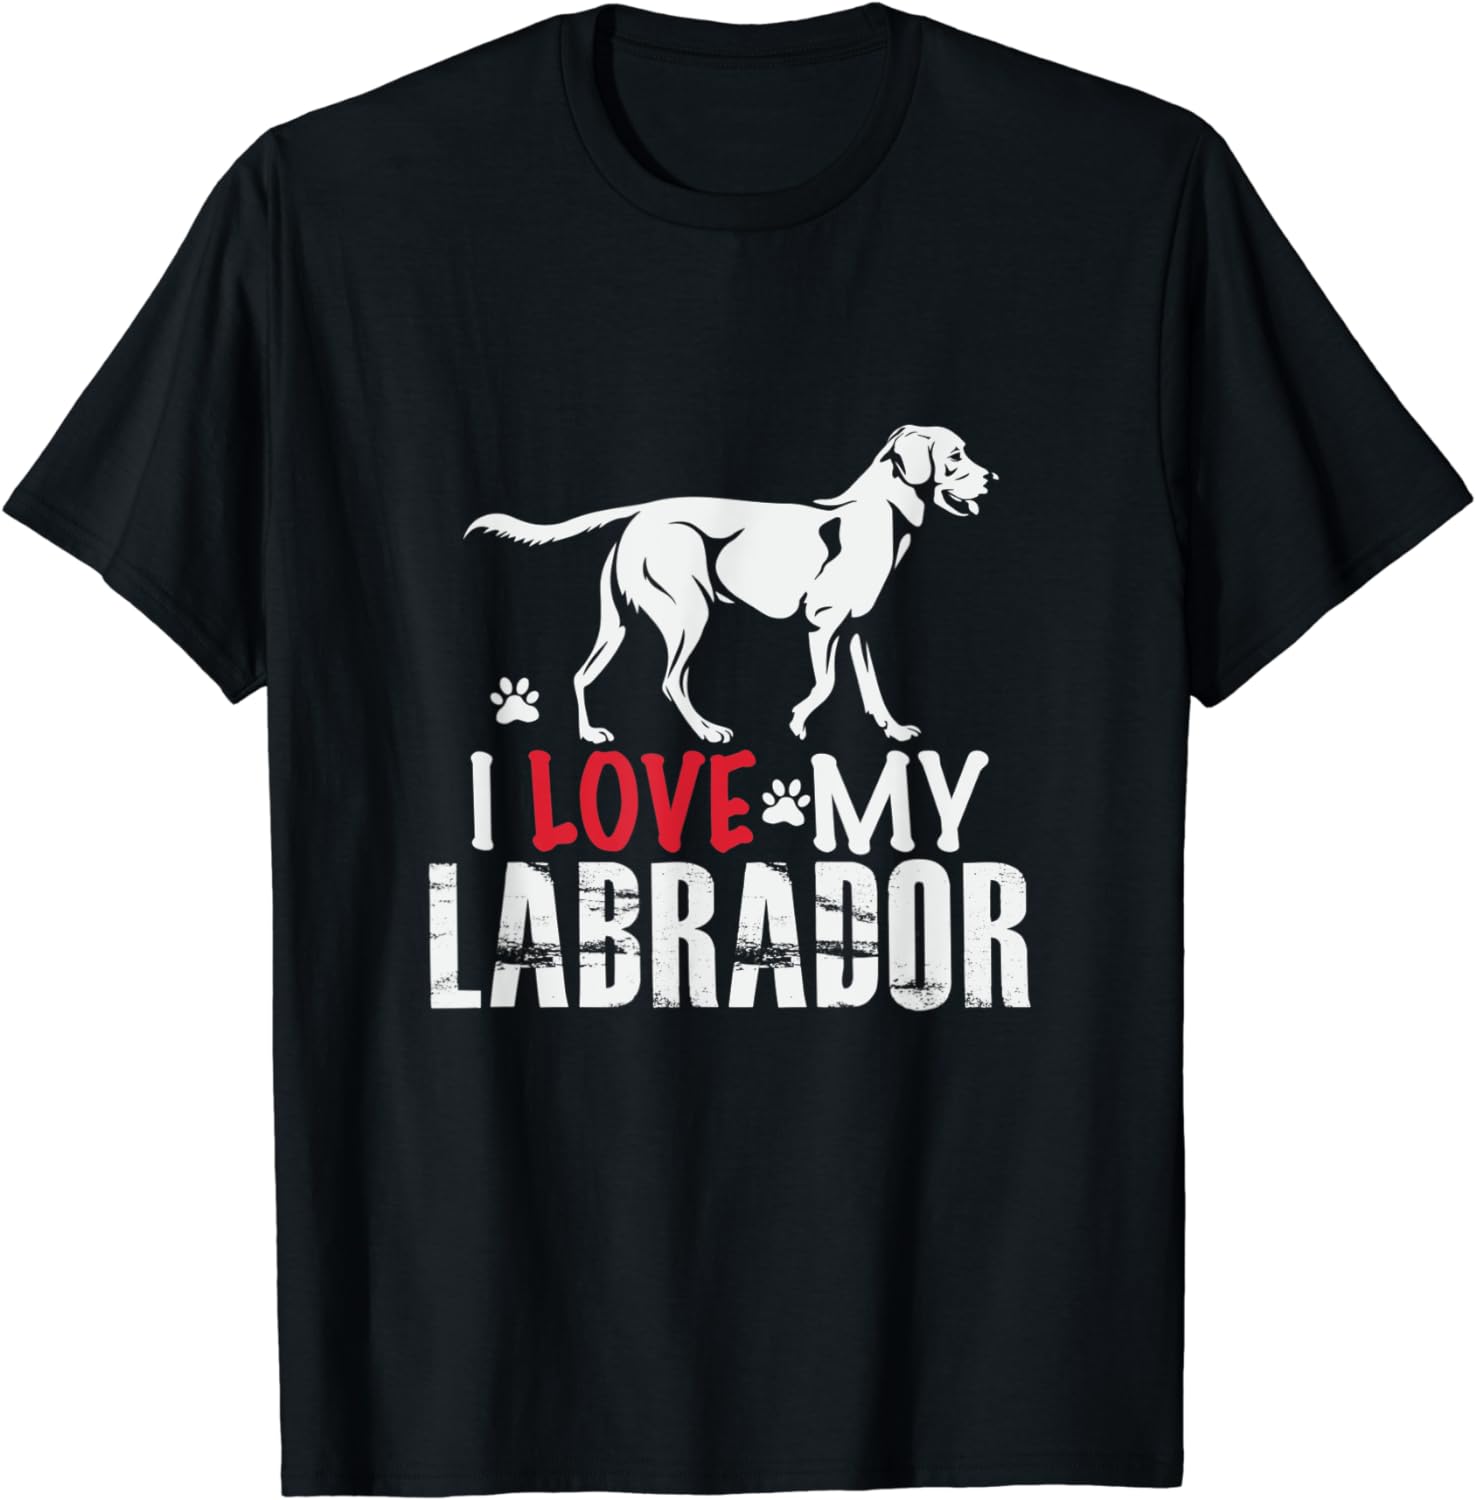 I Love My Labrador T-Shirt